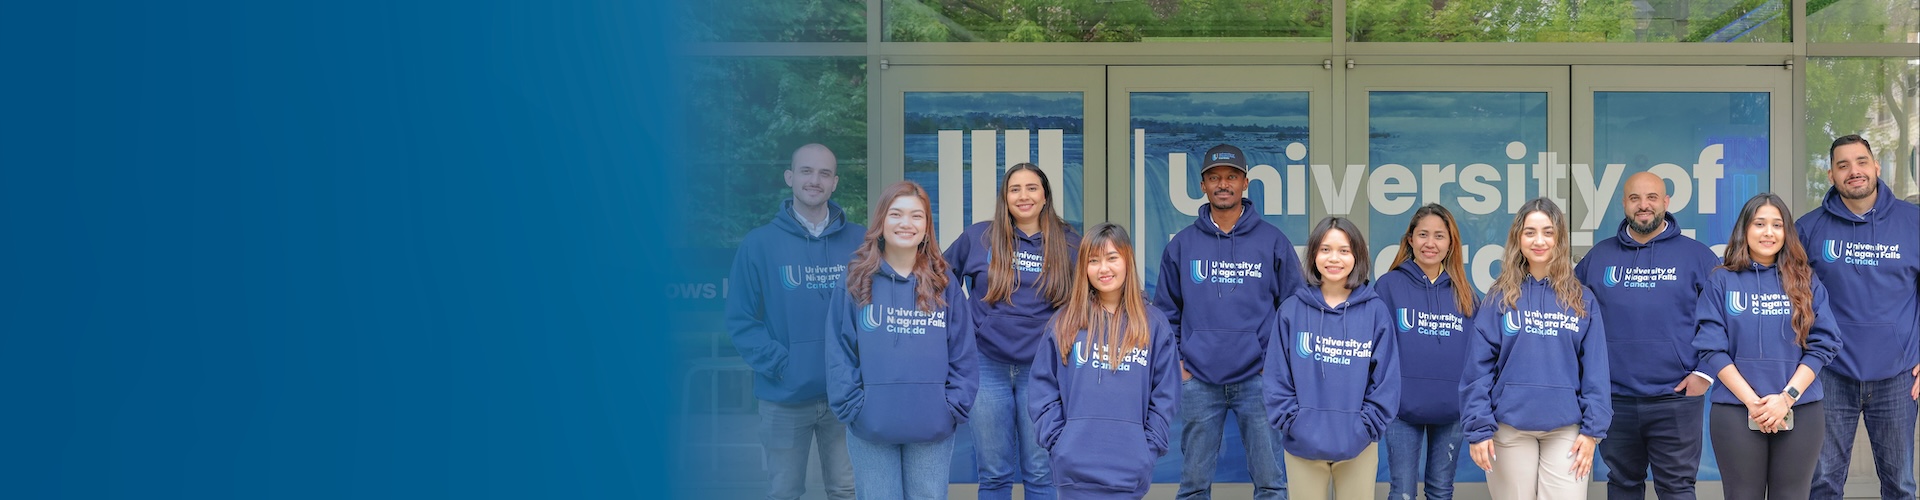 Group of University of Niagara Falls students wearing blue shirts